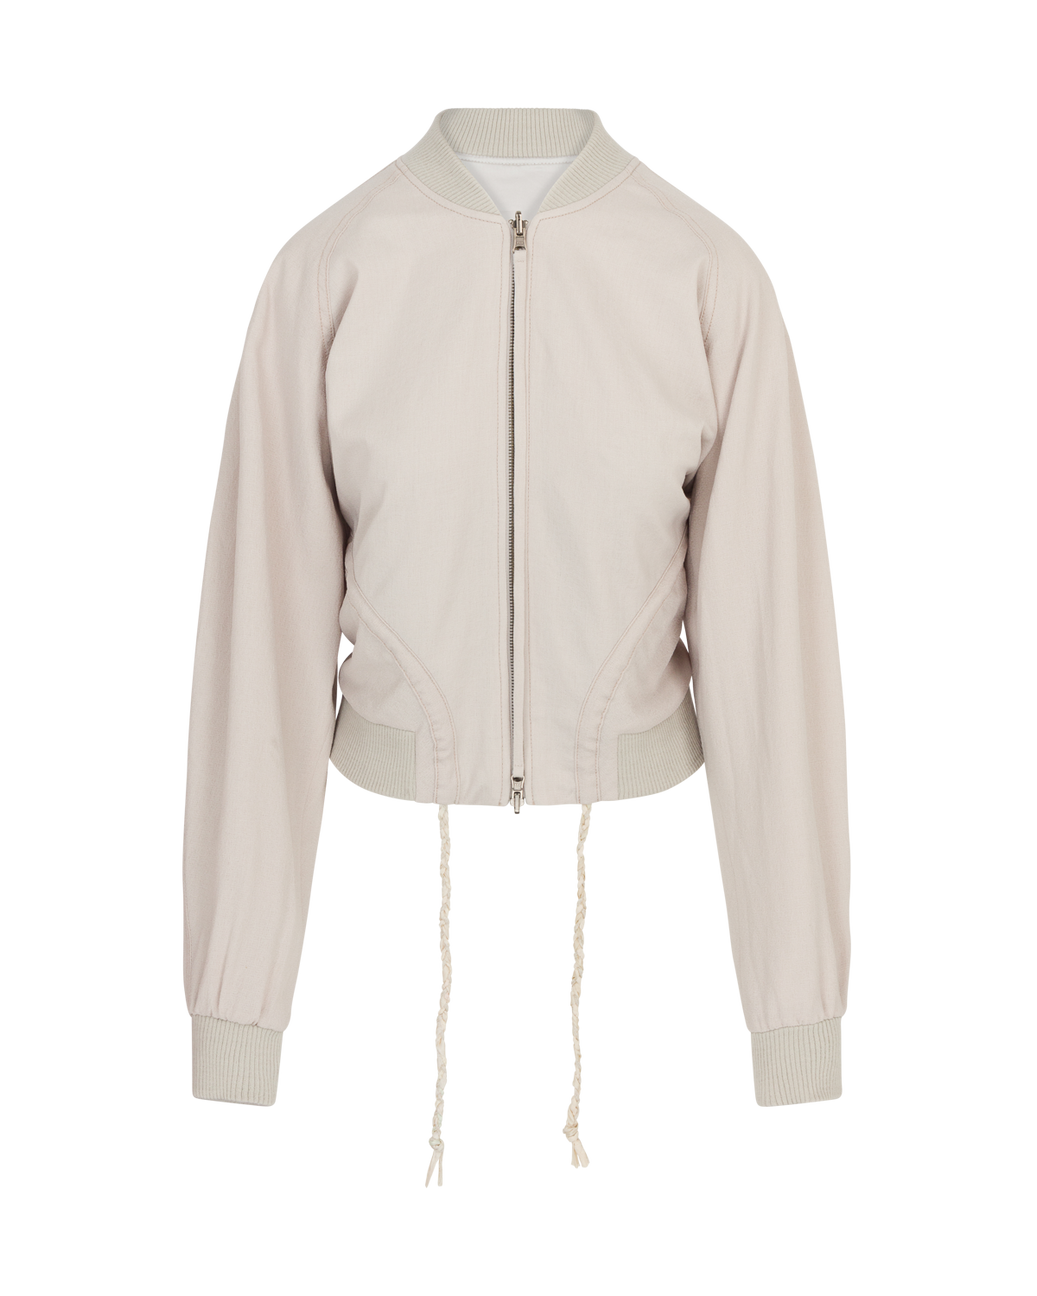 Designer Jackets & Coats | MACHINE-A